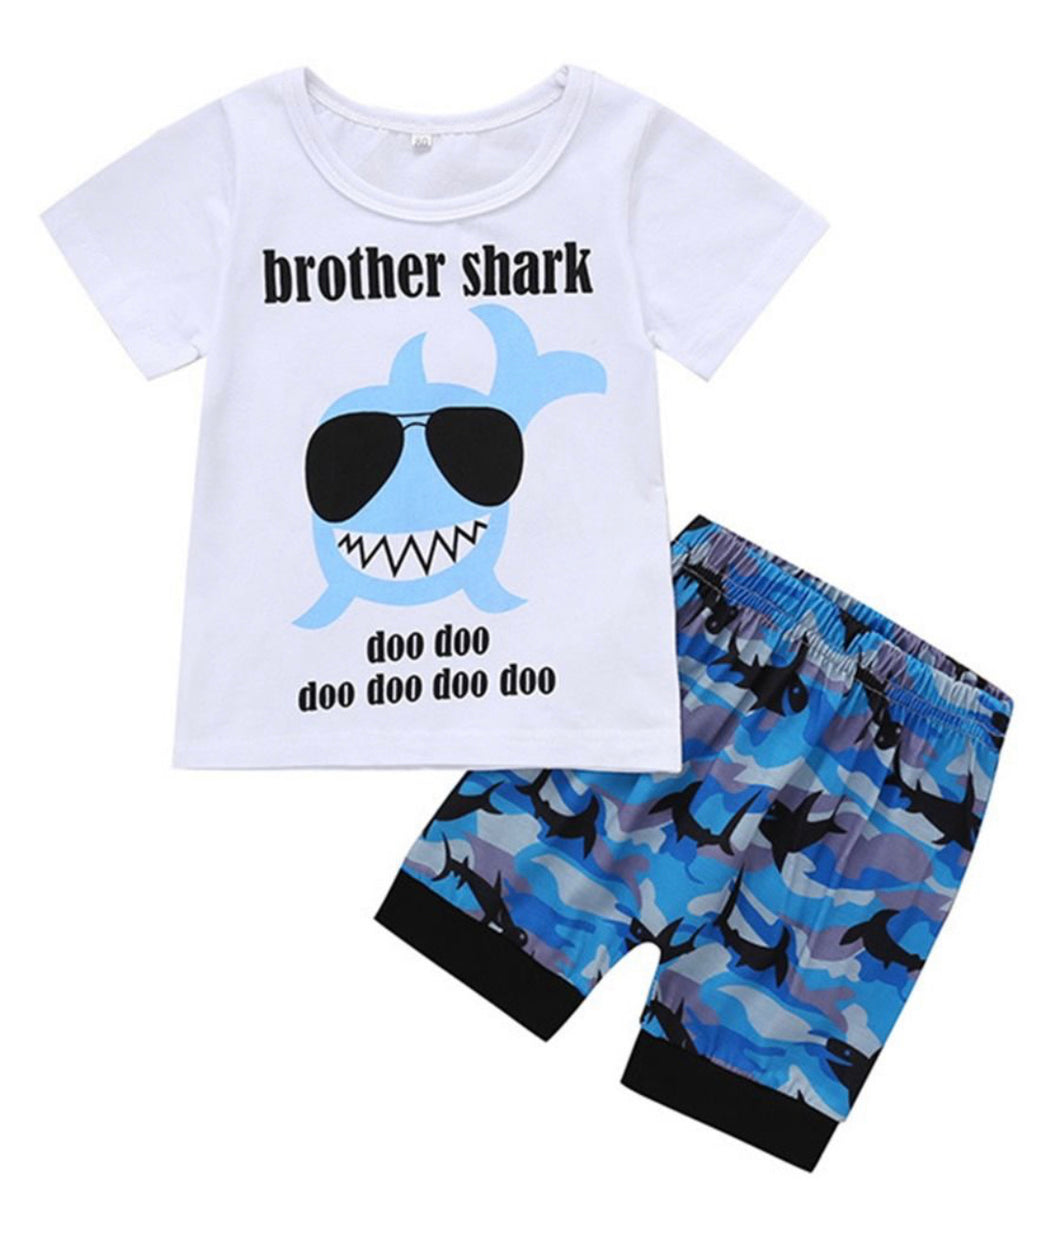 Brother shark set